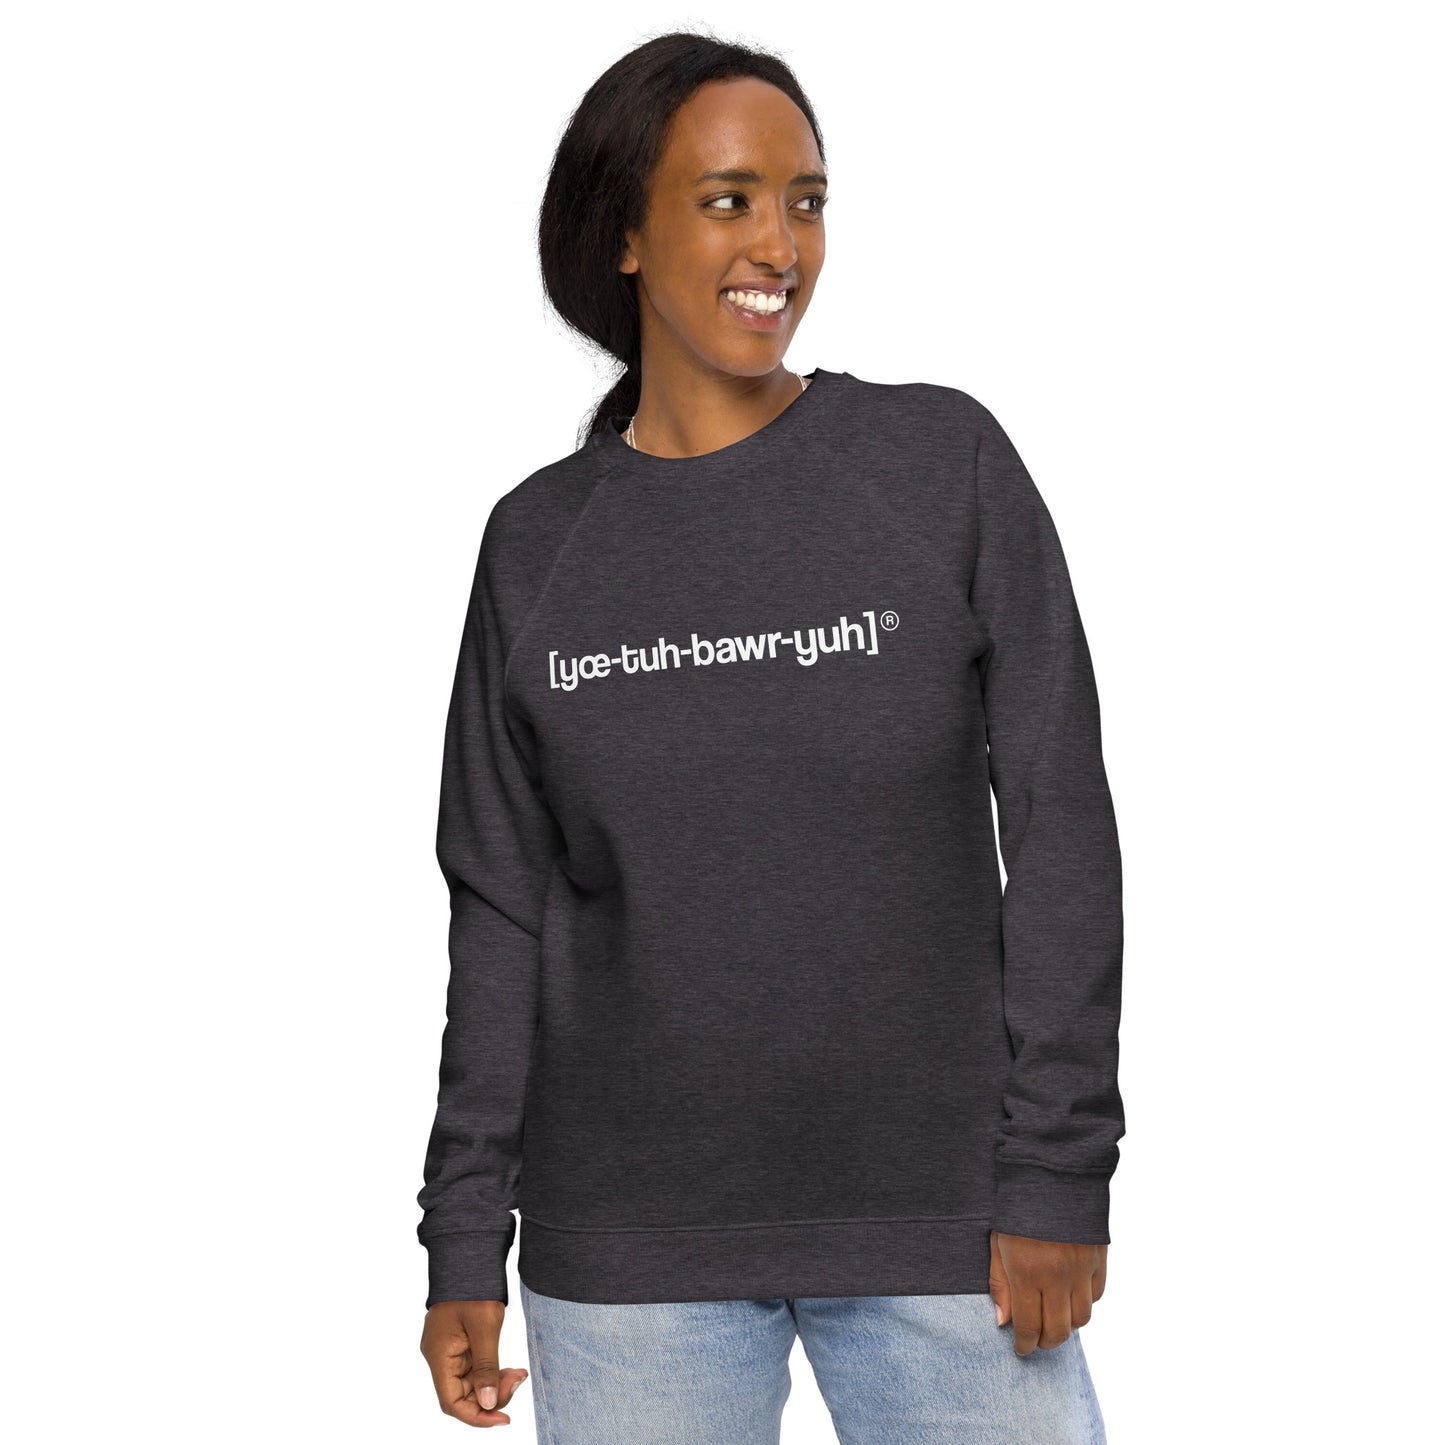 [yœ-tuh-bawr-yuh] ORIGINAL - Unisex organic raglan sweatshirt